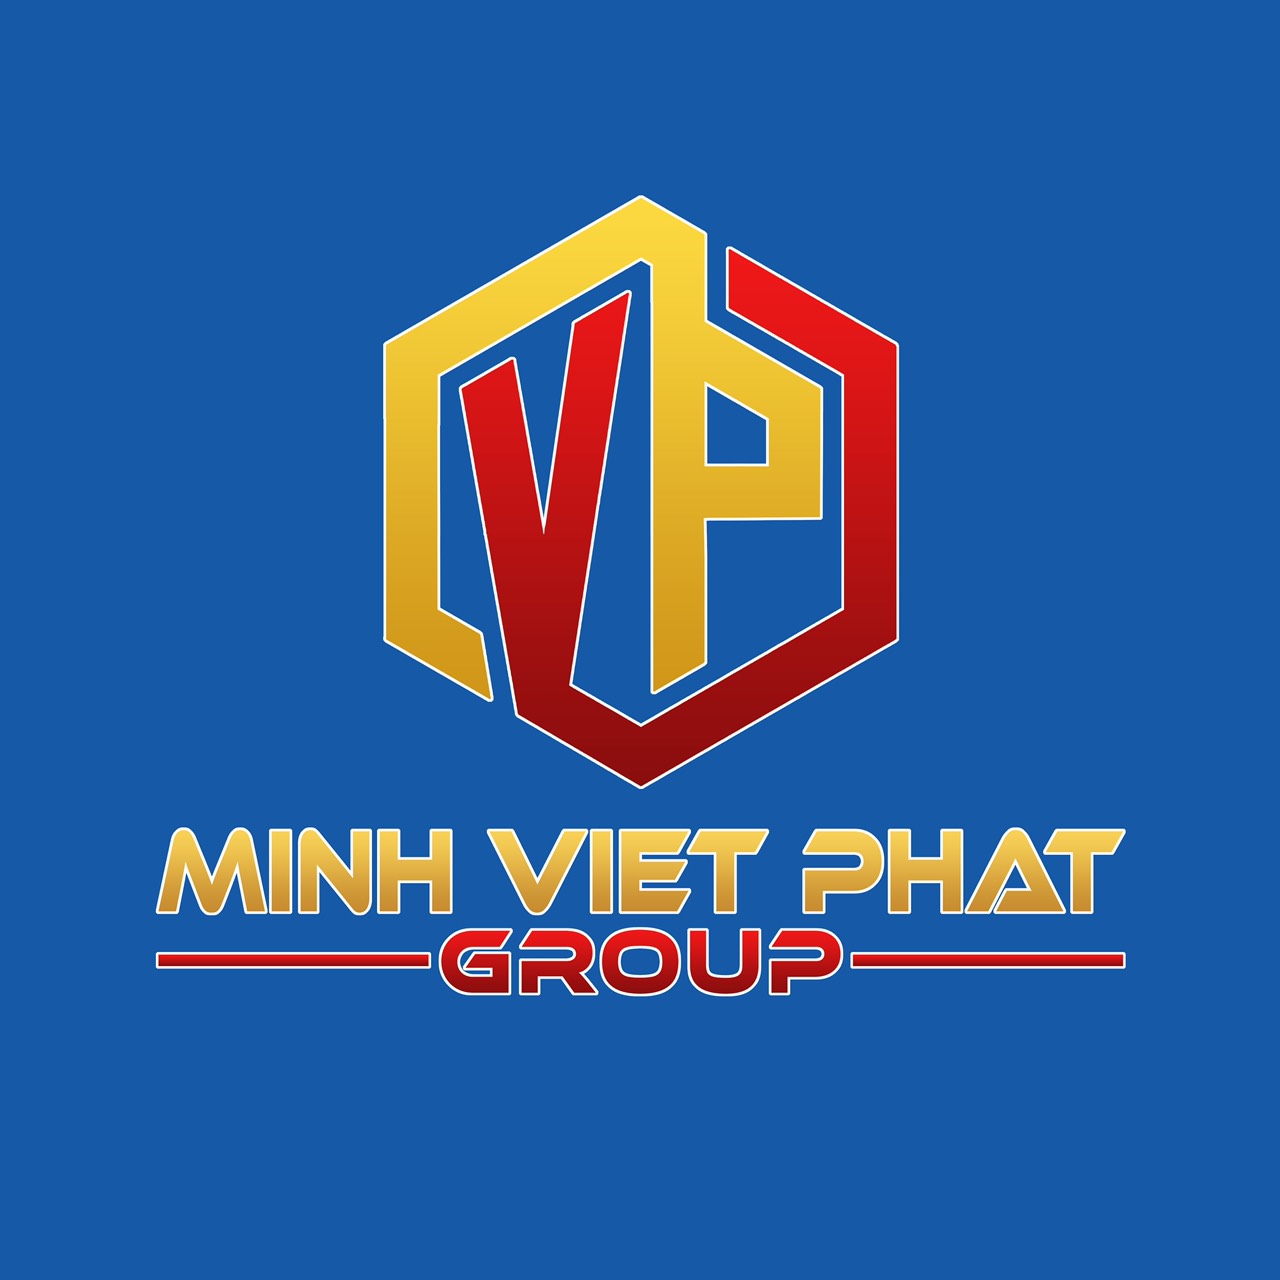 MINH VIET PHAT GROUP